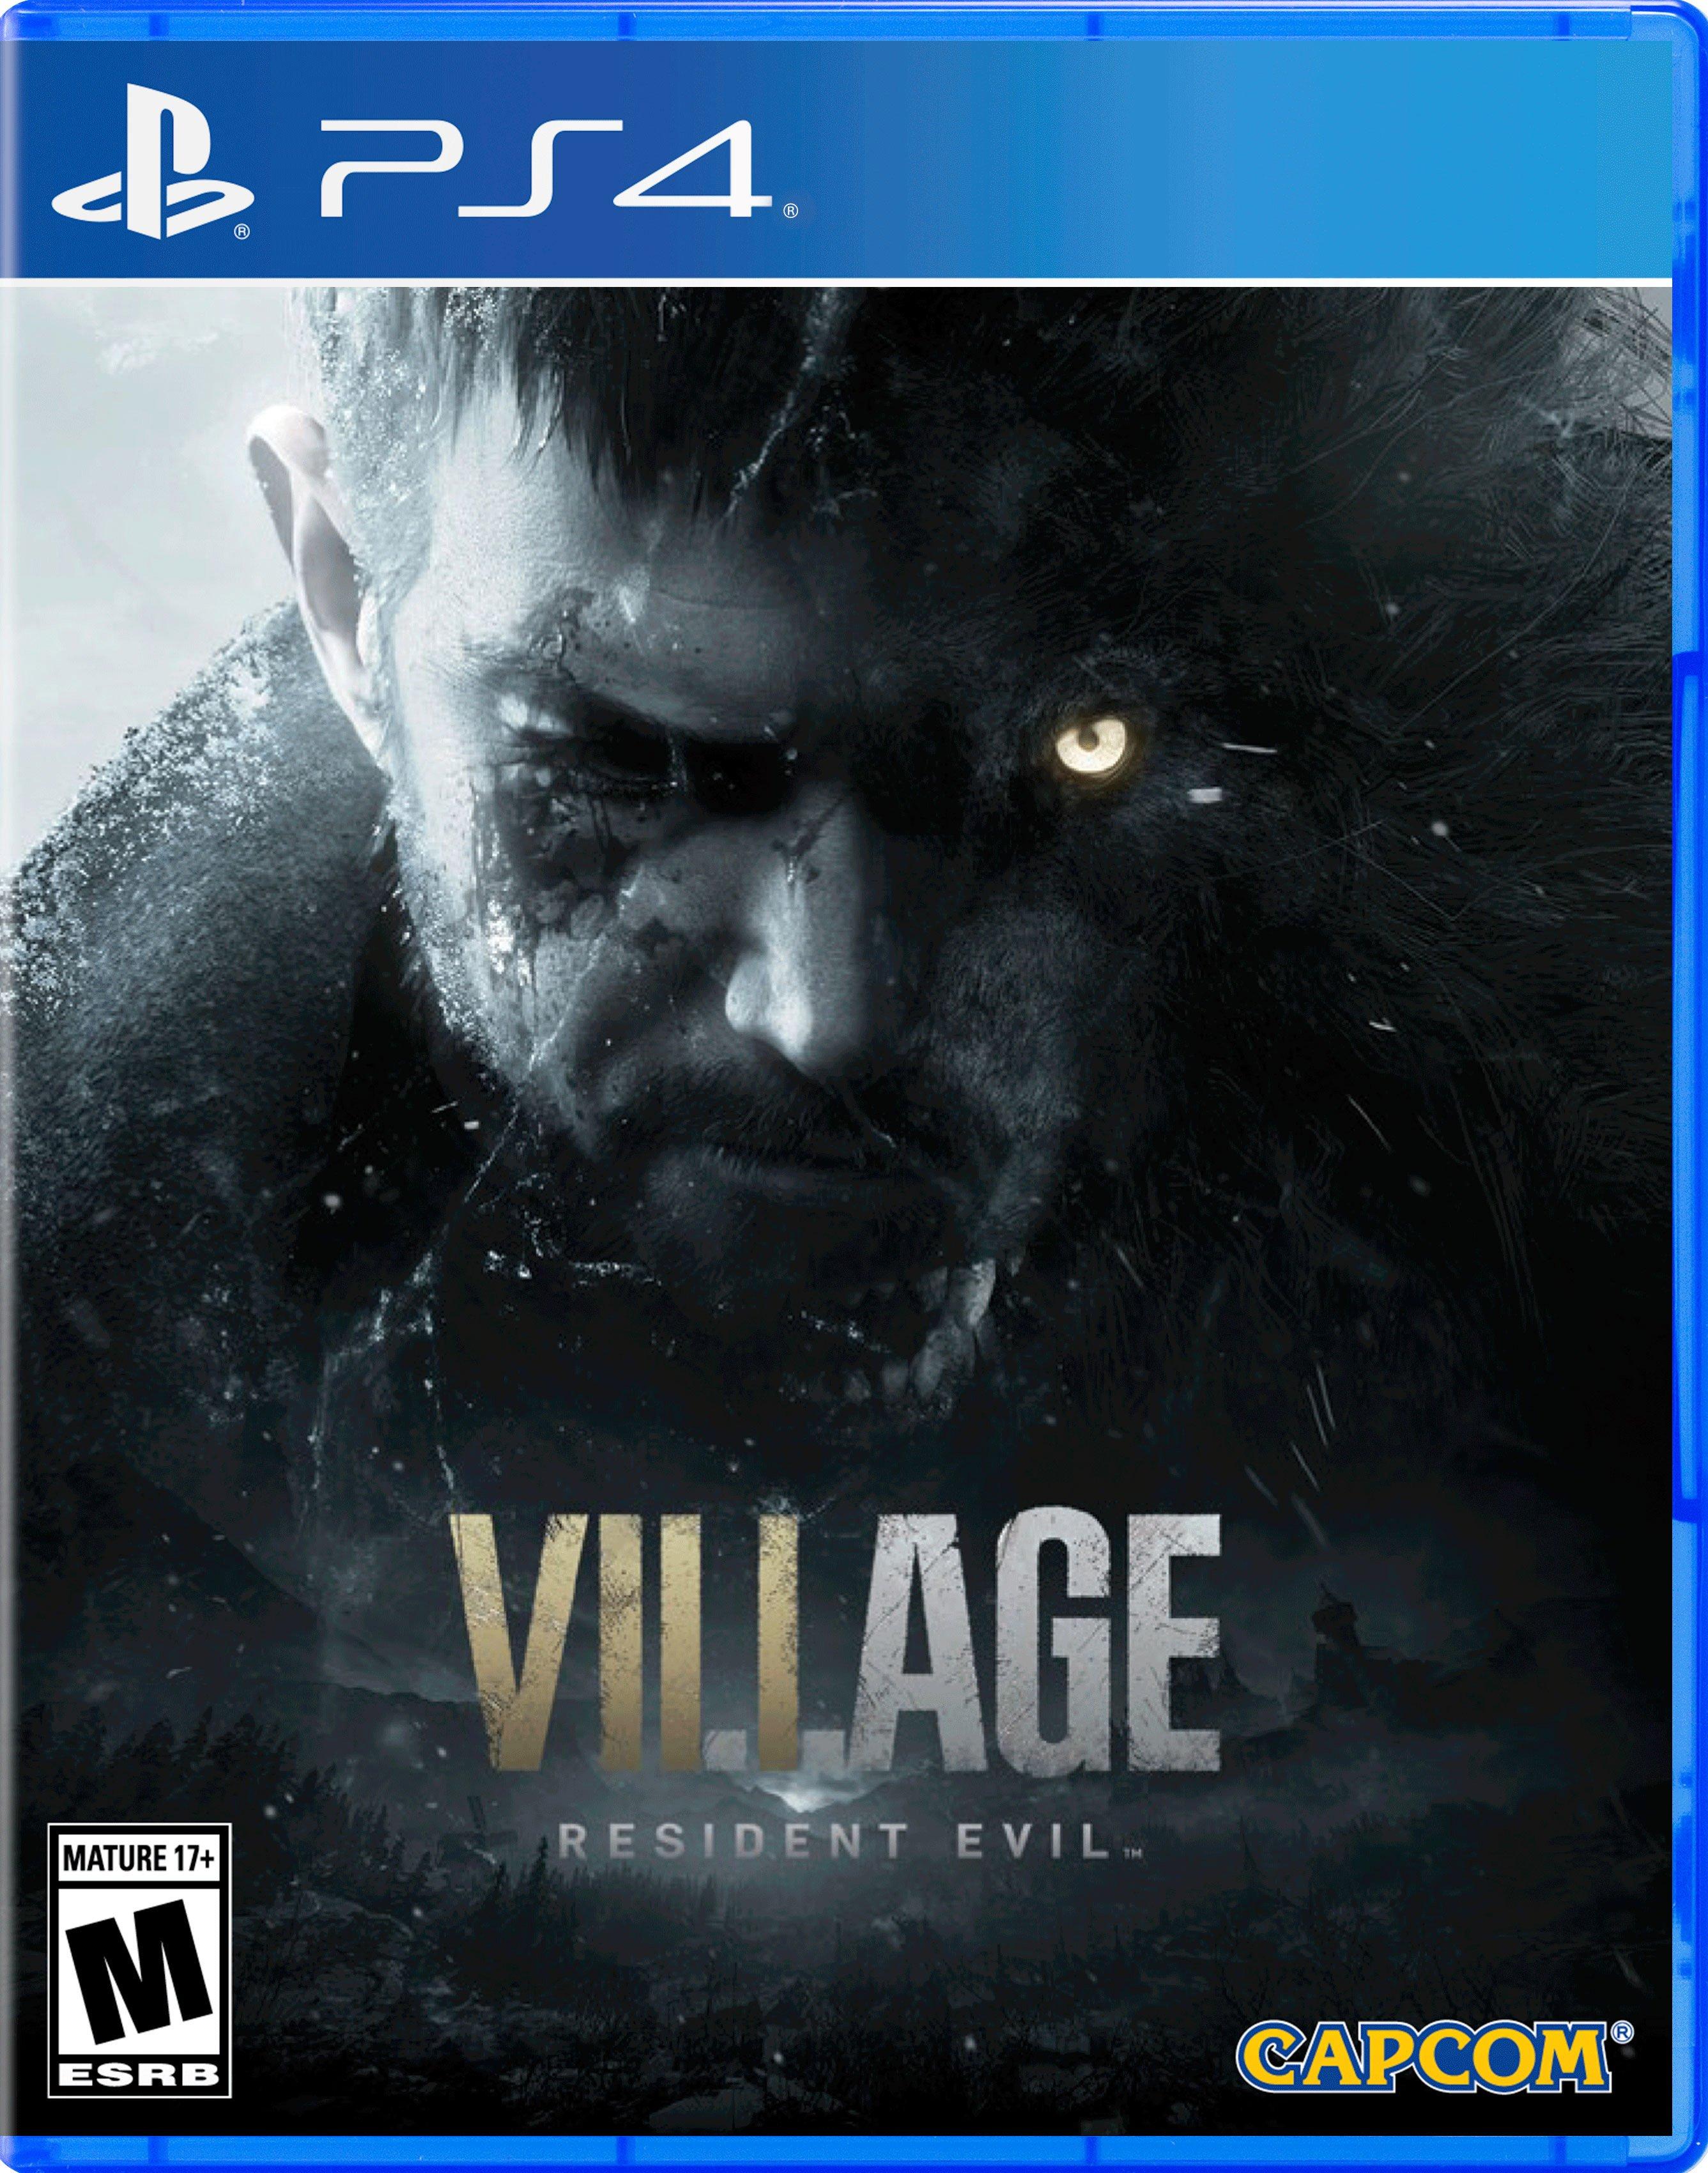 Village 4 8: | Evil Evil | GameStop Resident PlayStation Resident